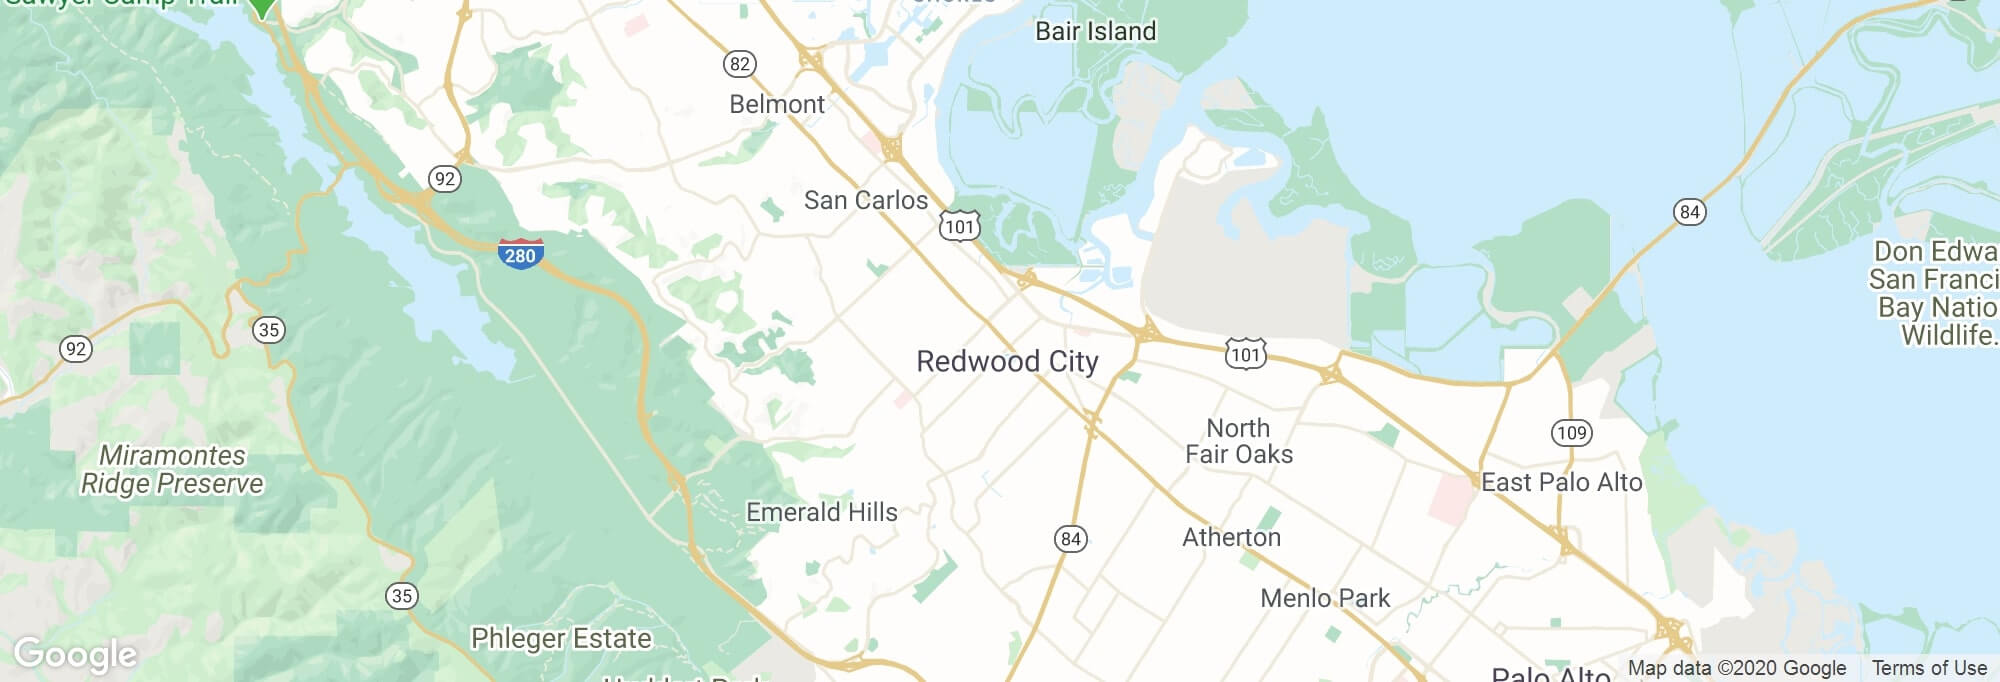 Redwood City city map